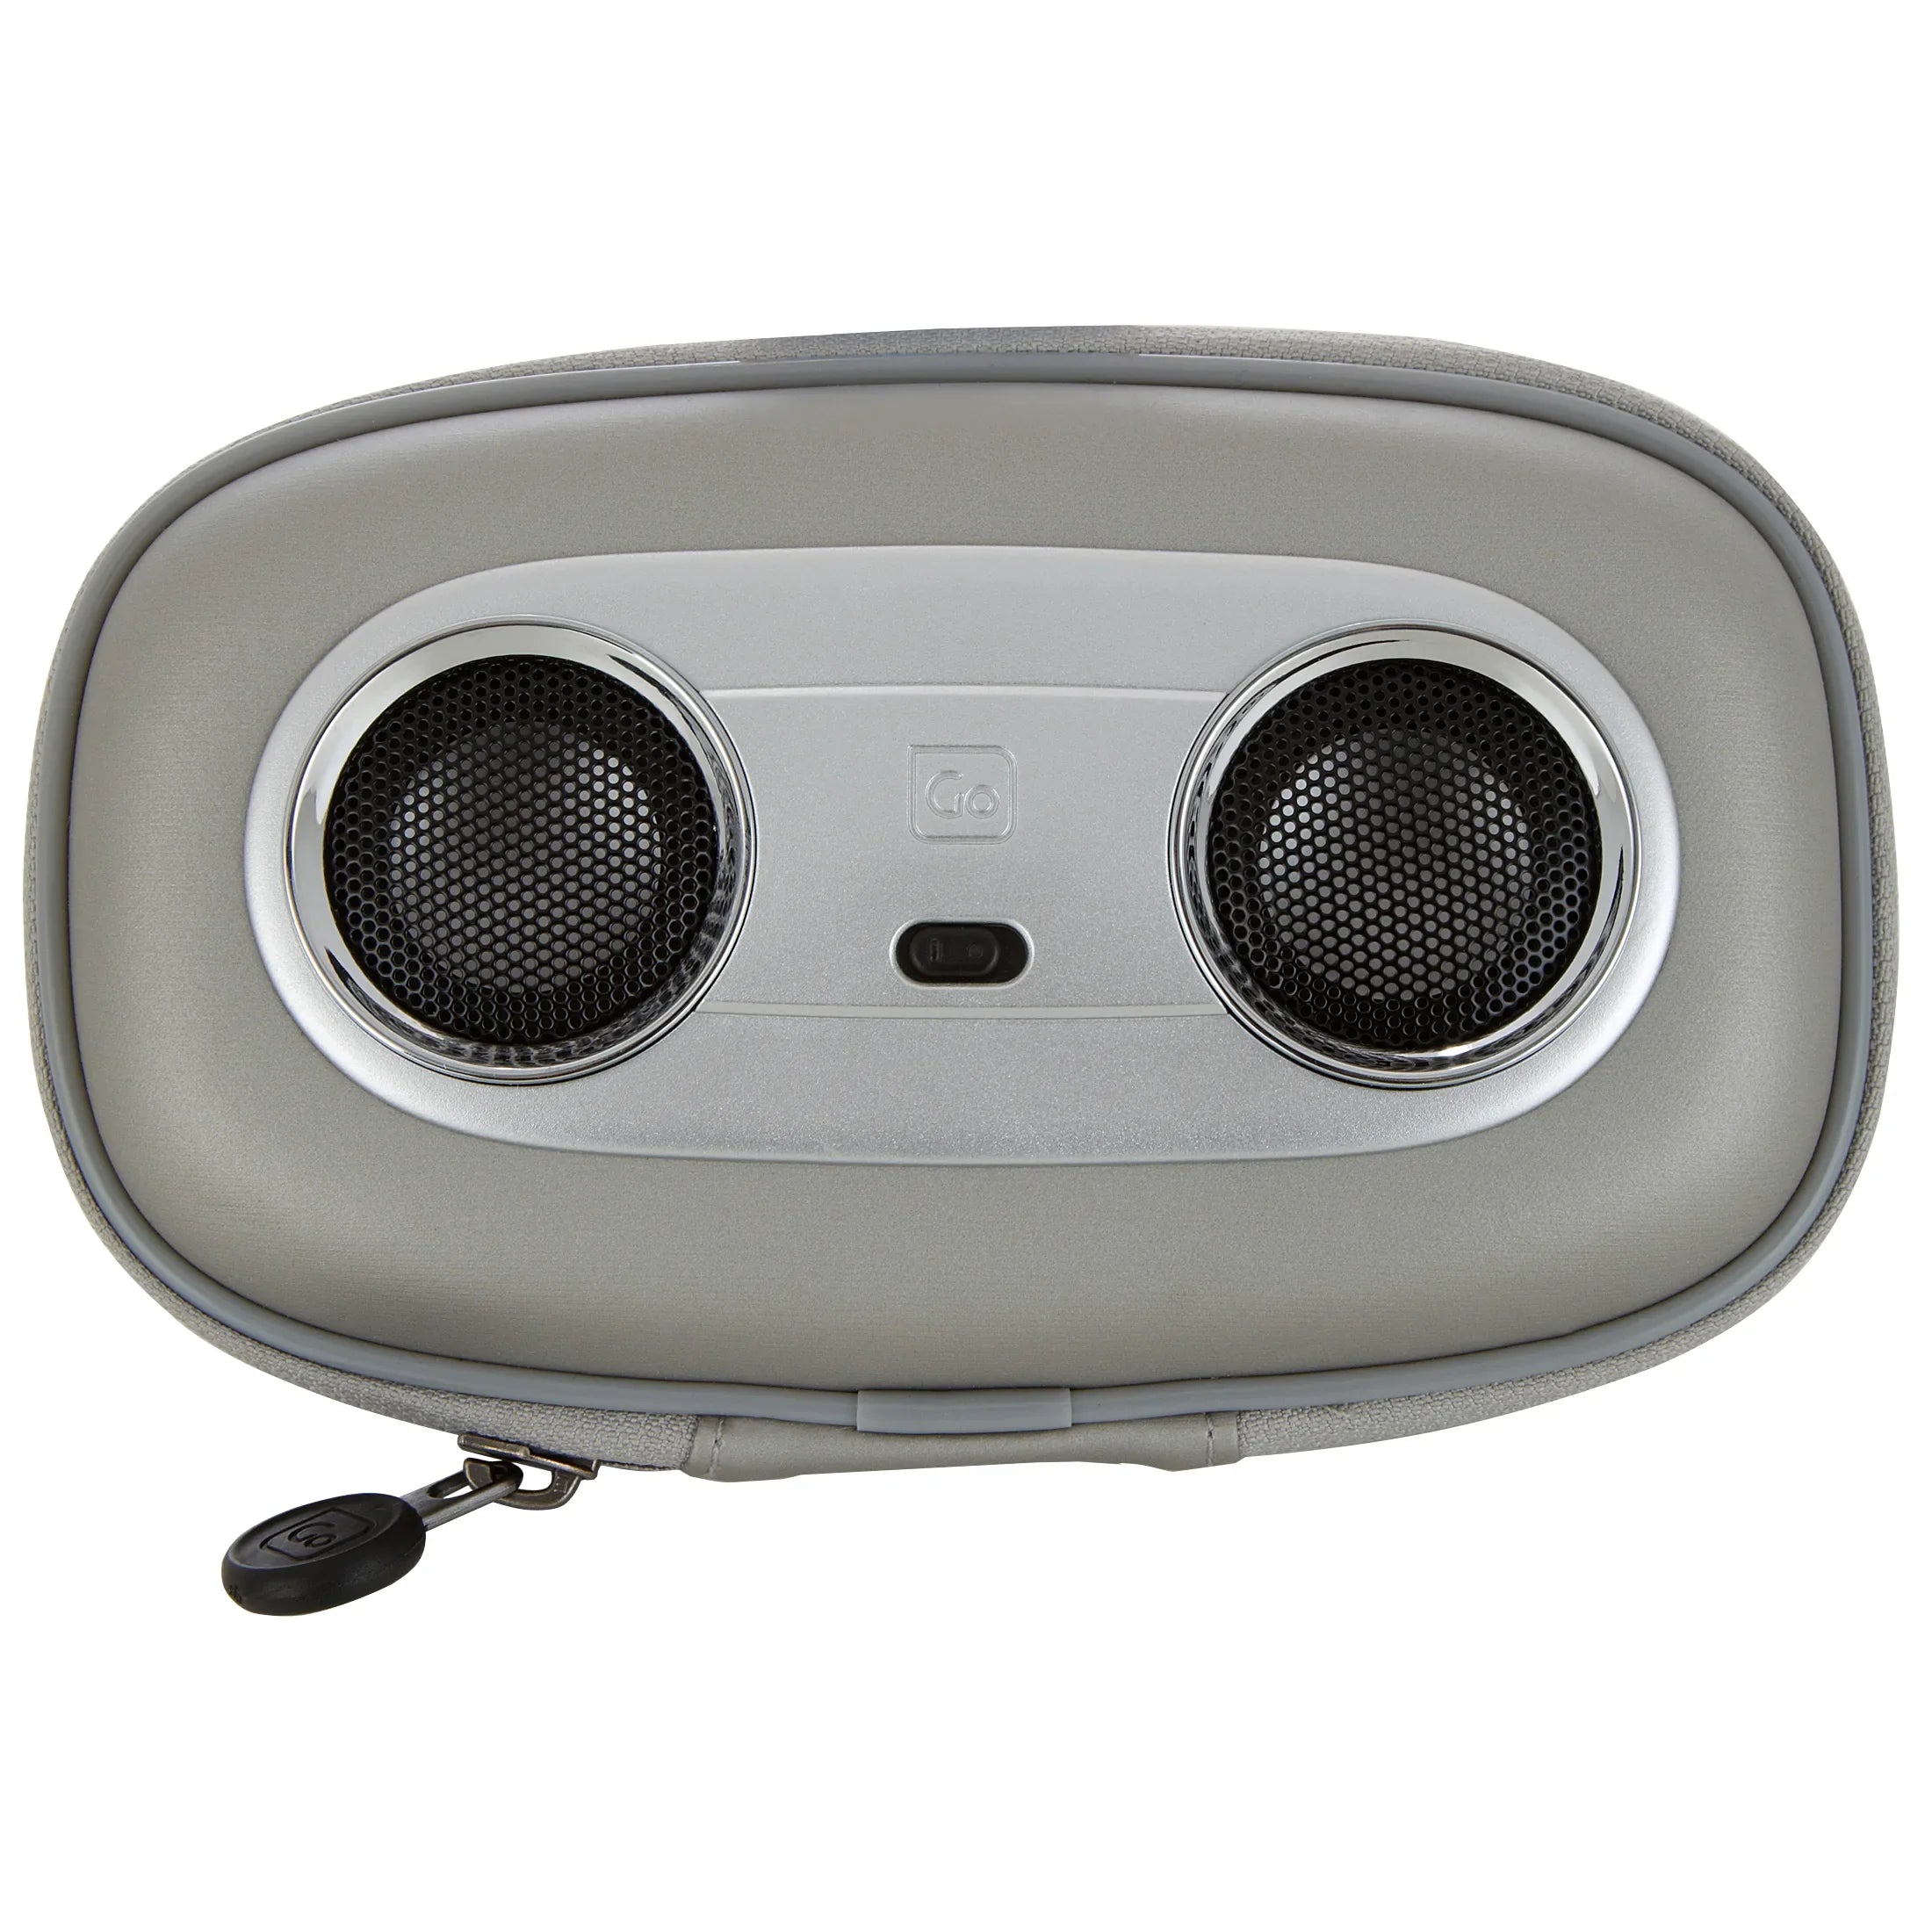 Design Go travel accessories speaker case retro speaker housing - silver